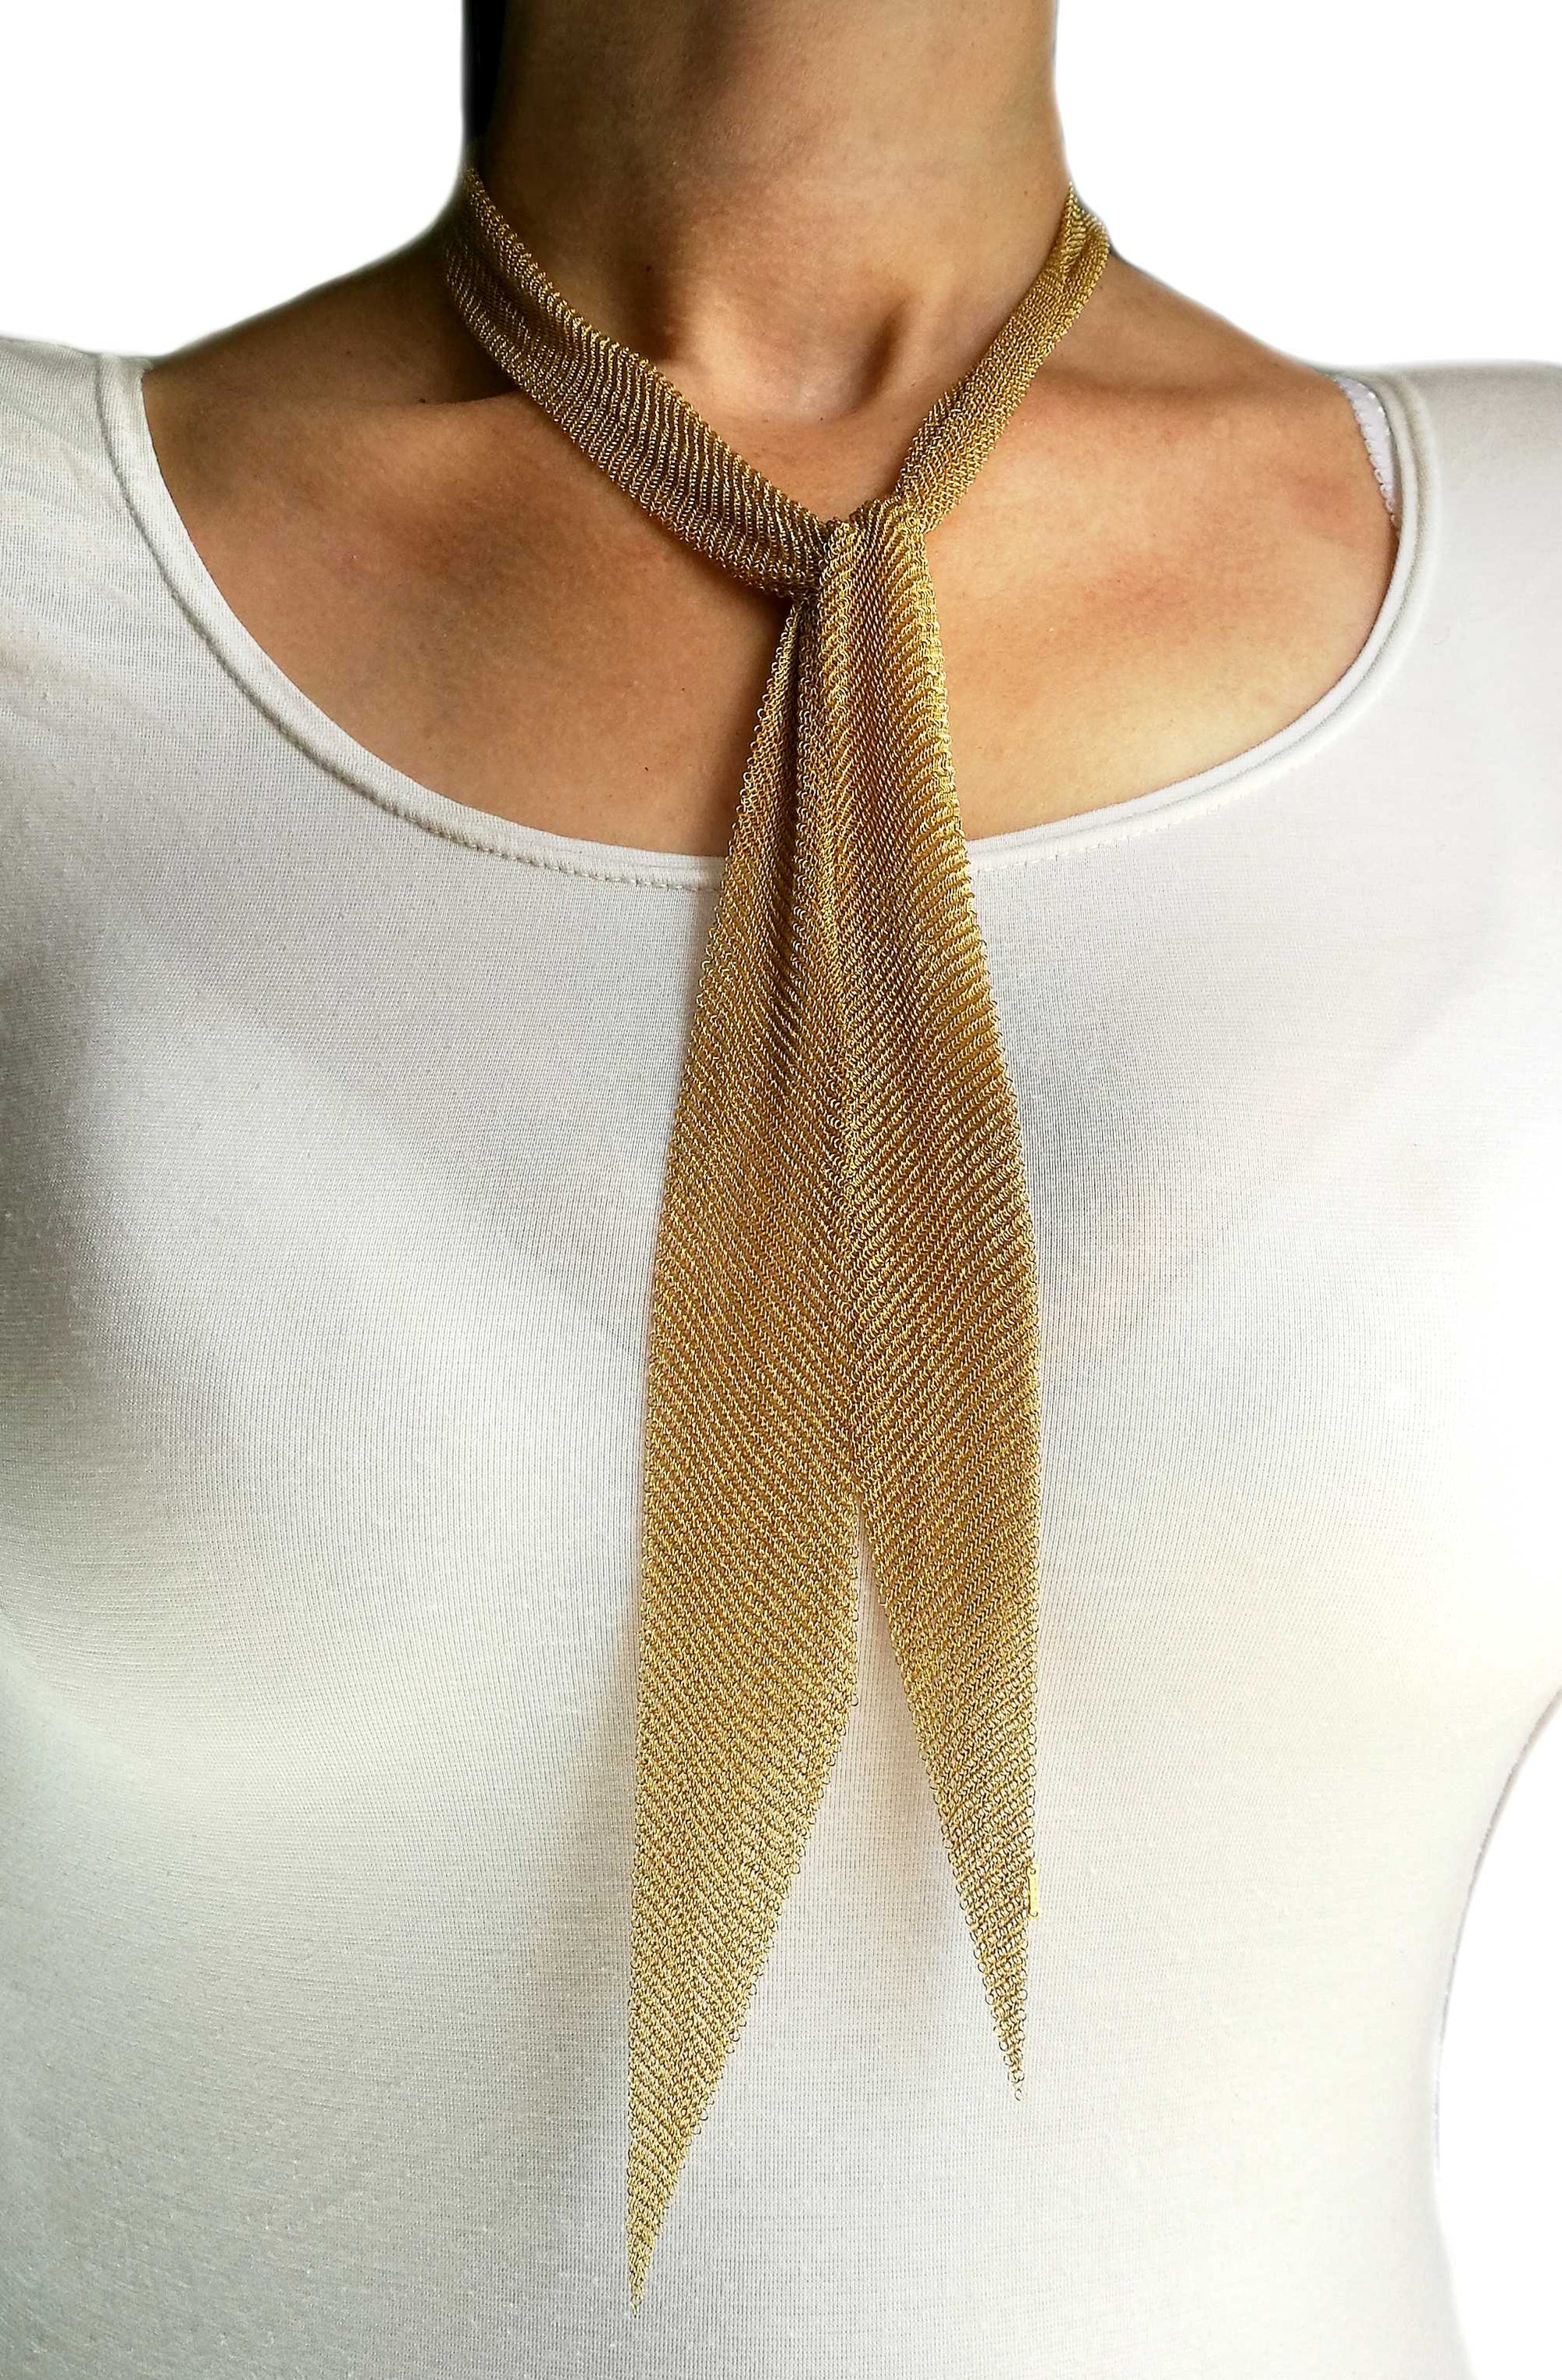 Elsa Peretti™ Mesh scarf necklace in sterling silver, small. | Tiffany & Co.